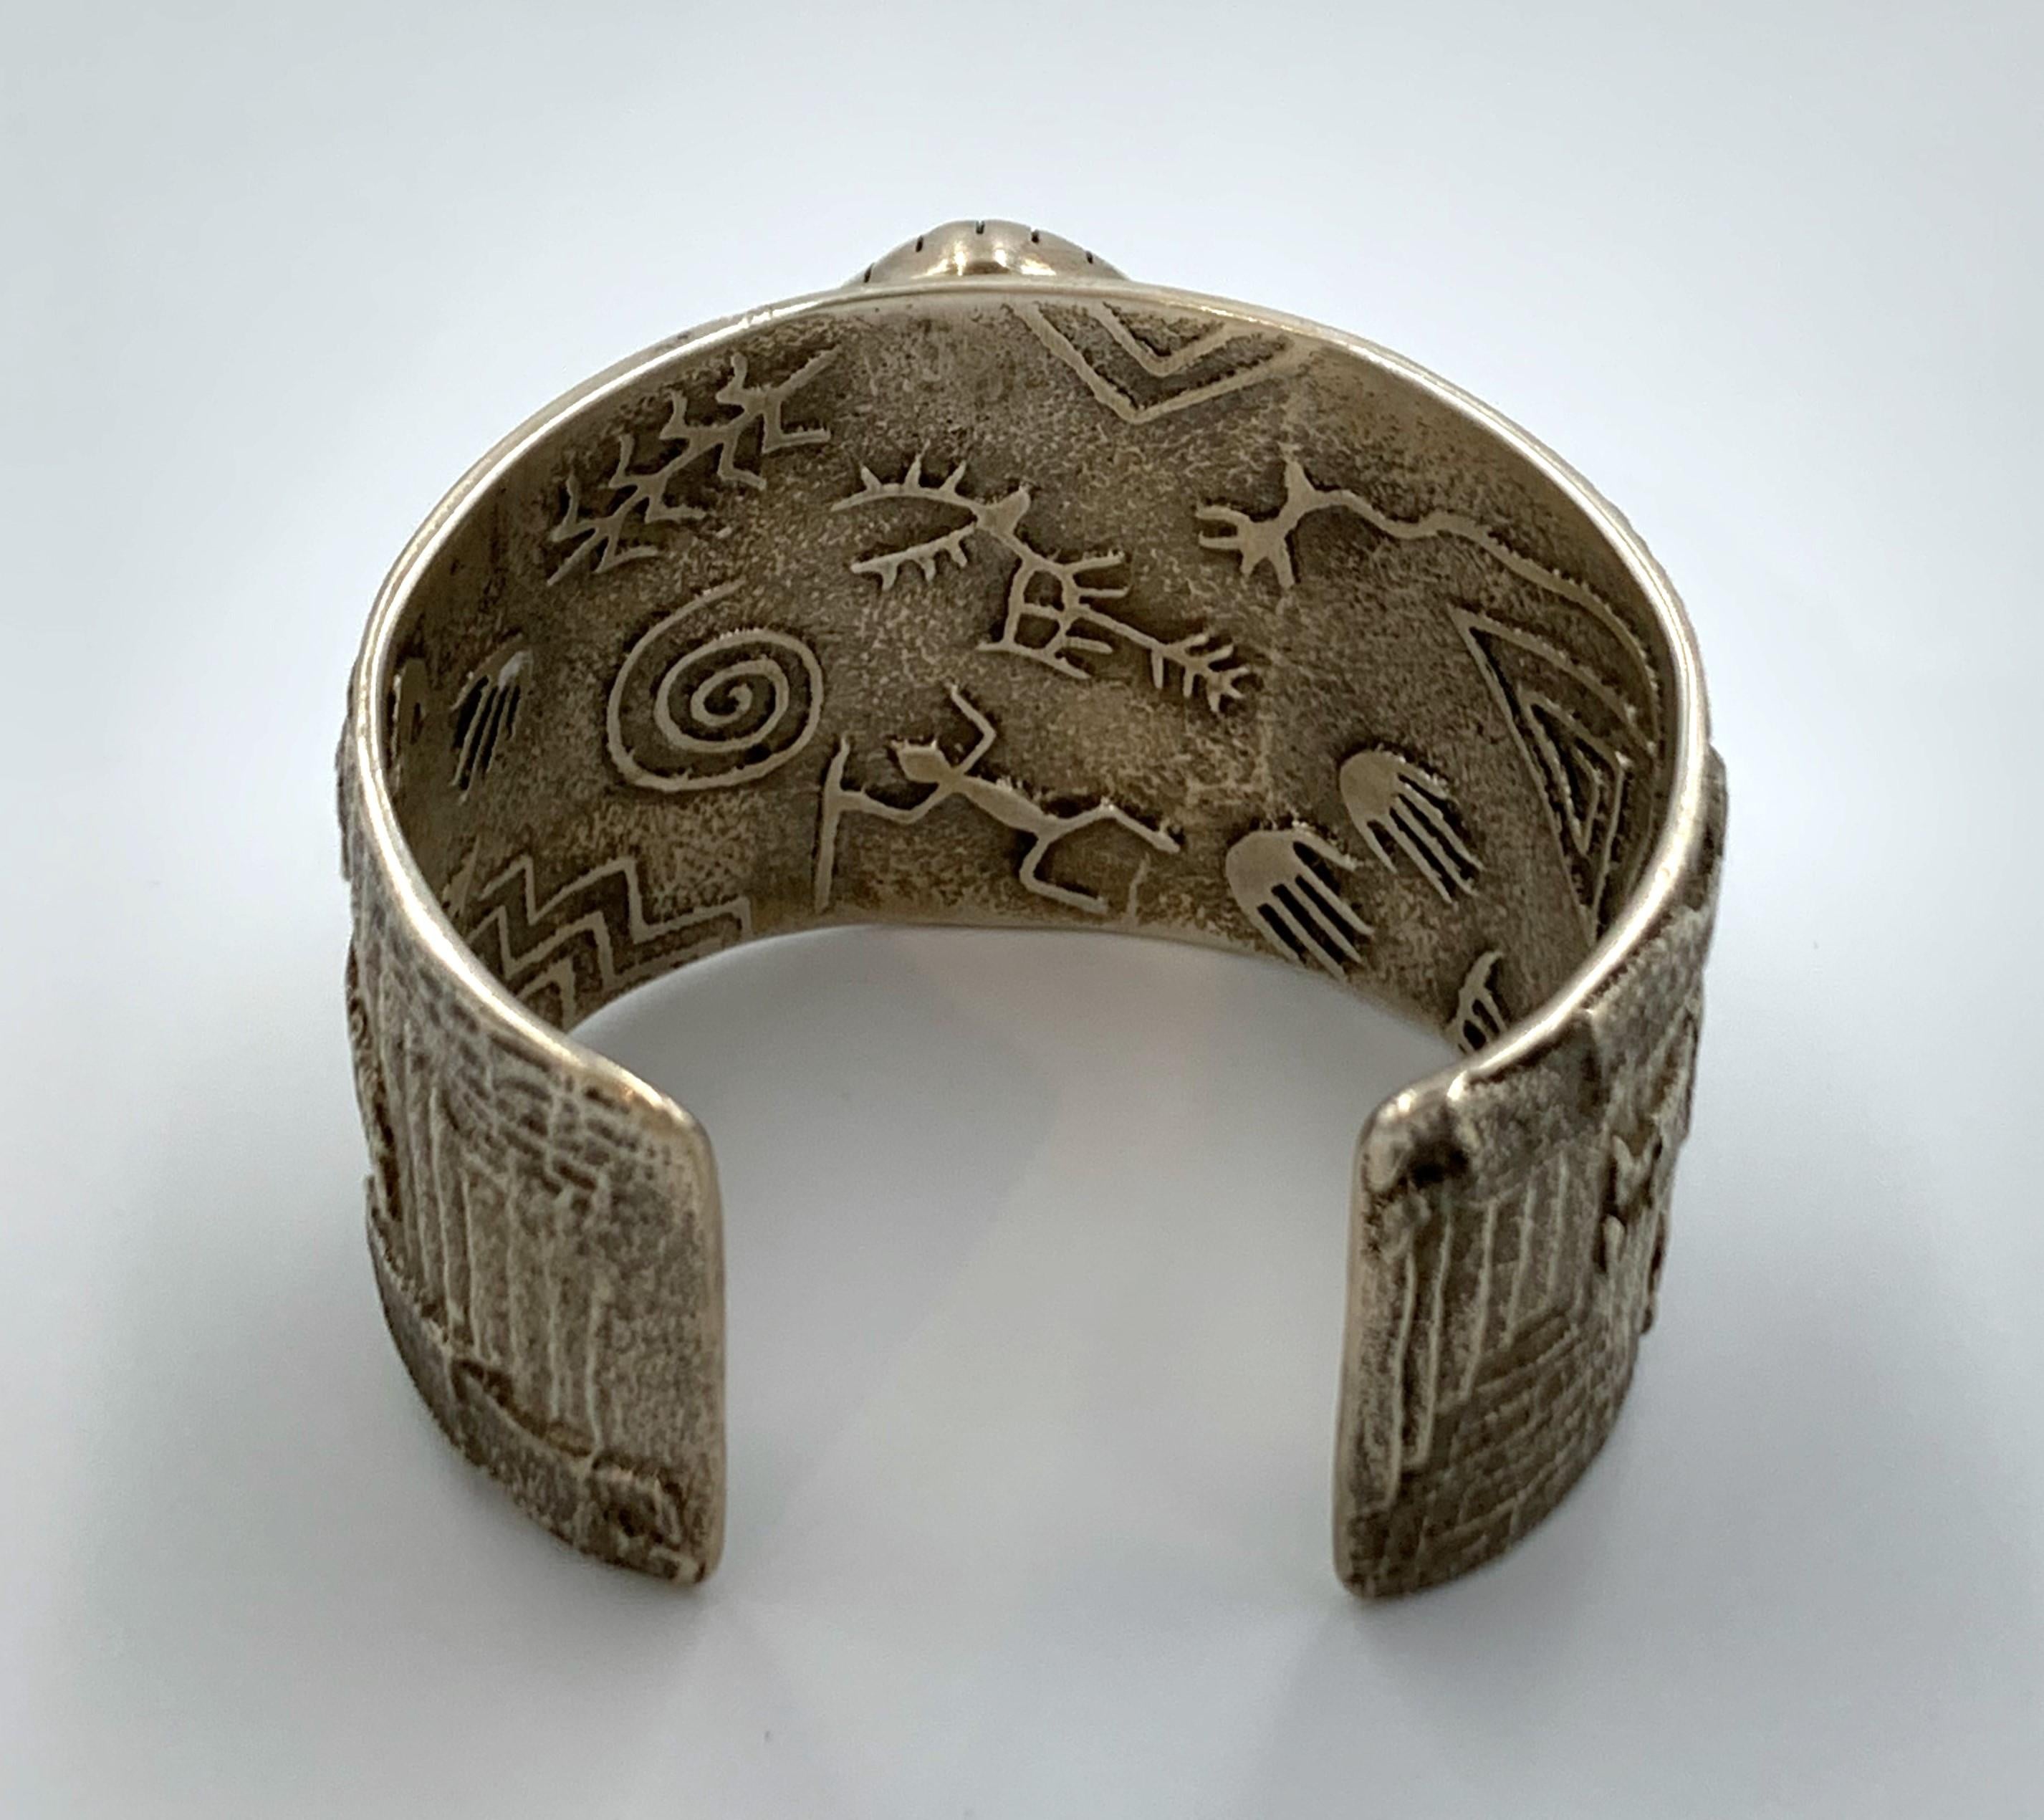 tufa cast silver cuff bracelet with lander turquoise spider price